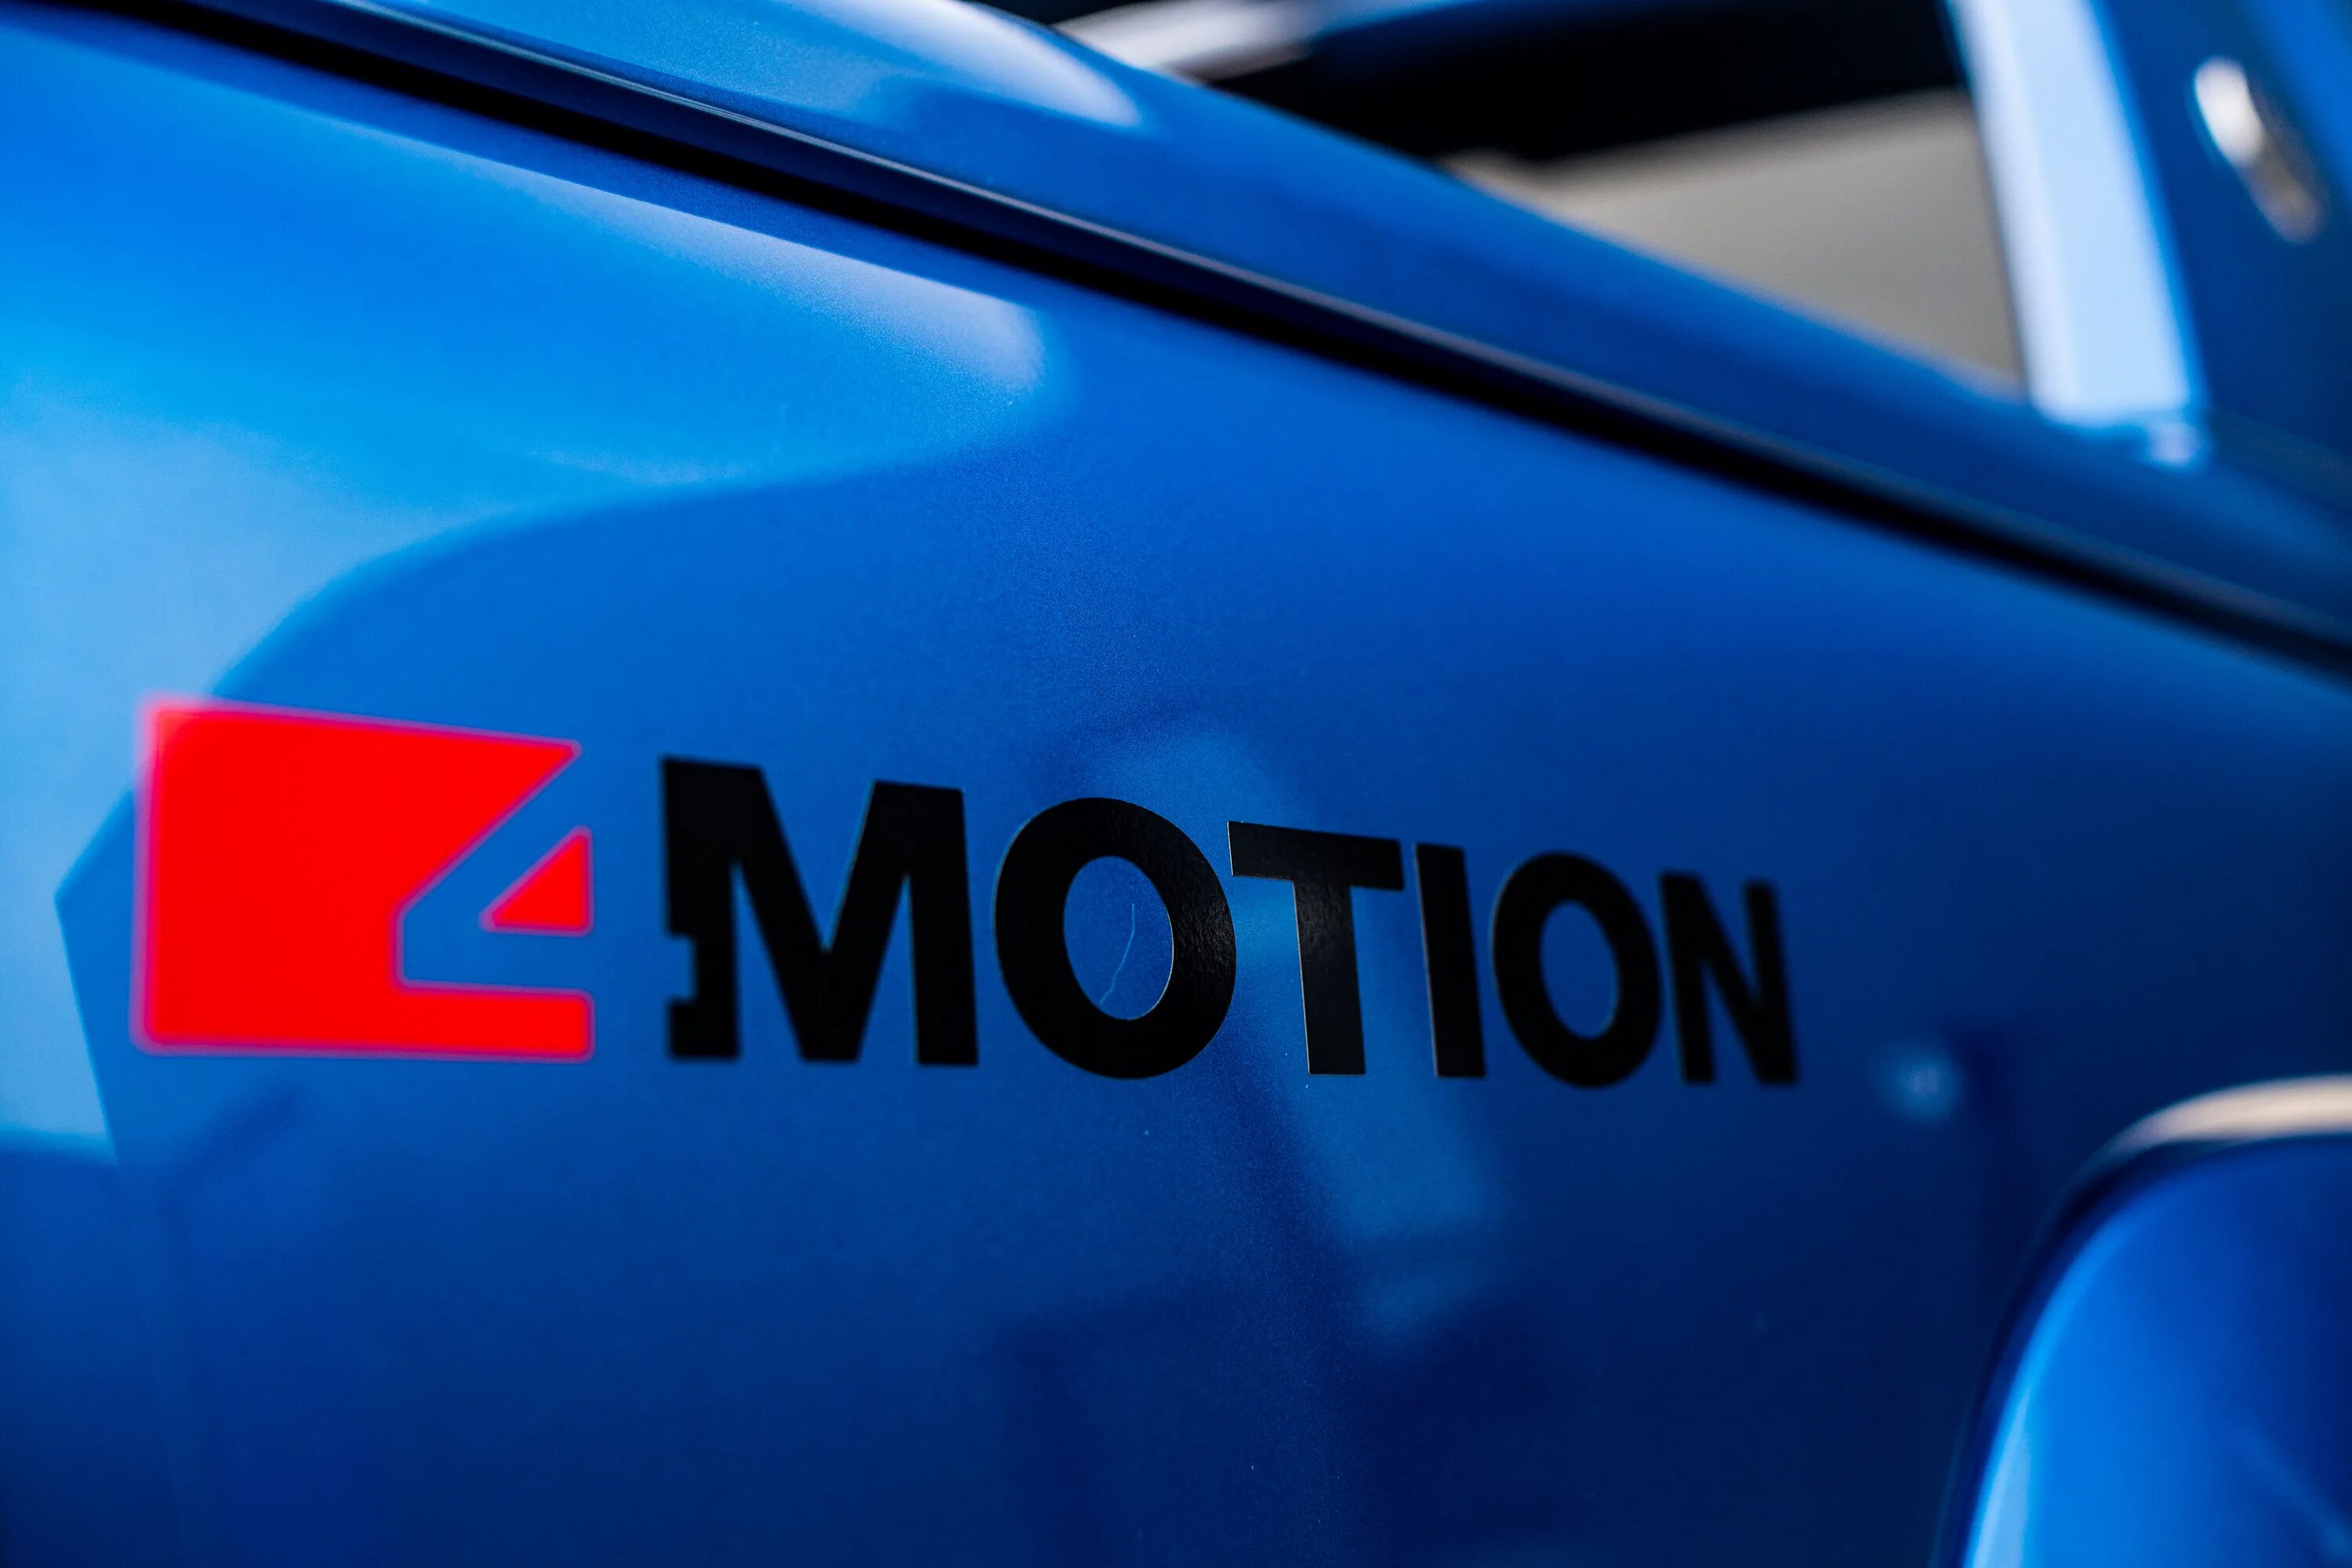 Амарок 4 Motion. Фольксваген мотион. Volkswagen 4motion шильдик. 4 Motion эмблема. Volkswagen motion